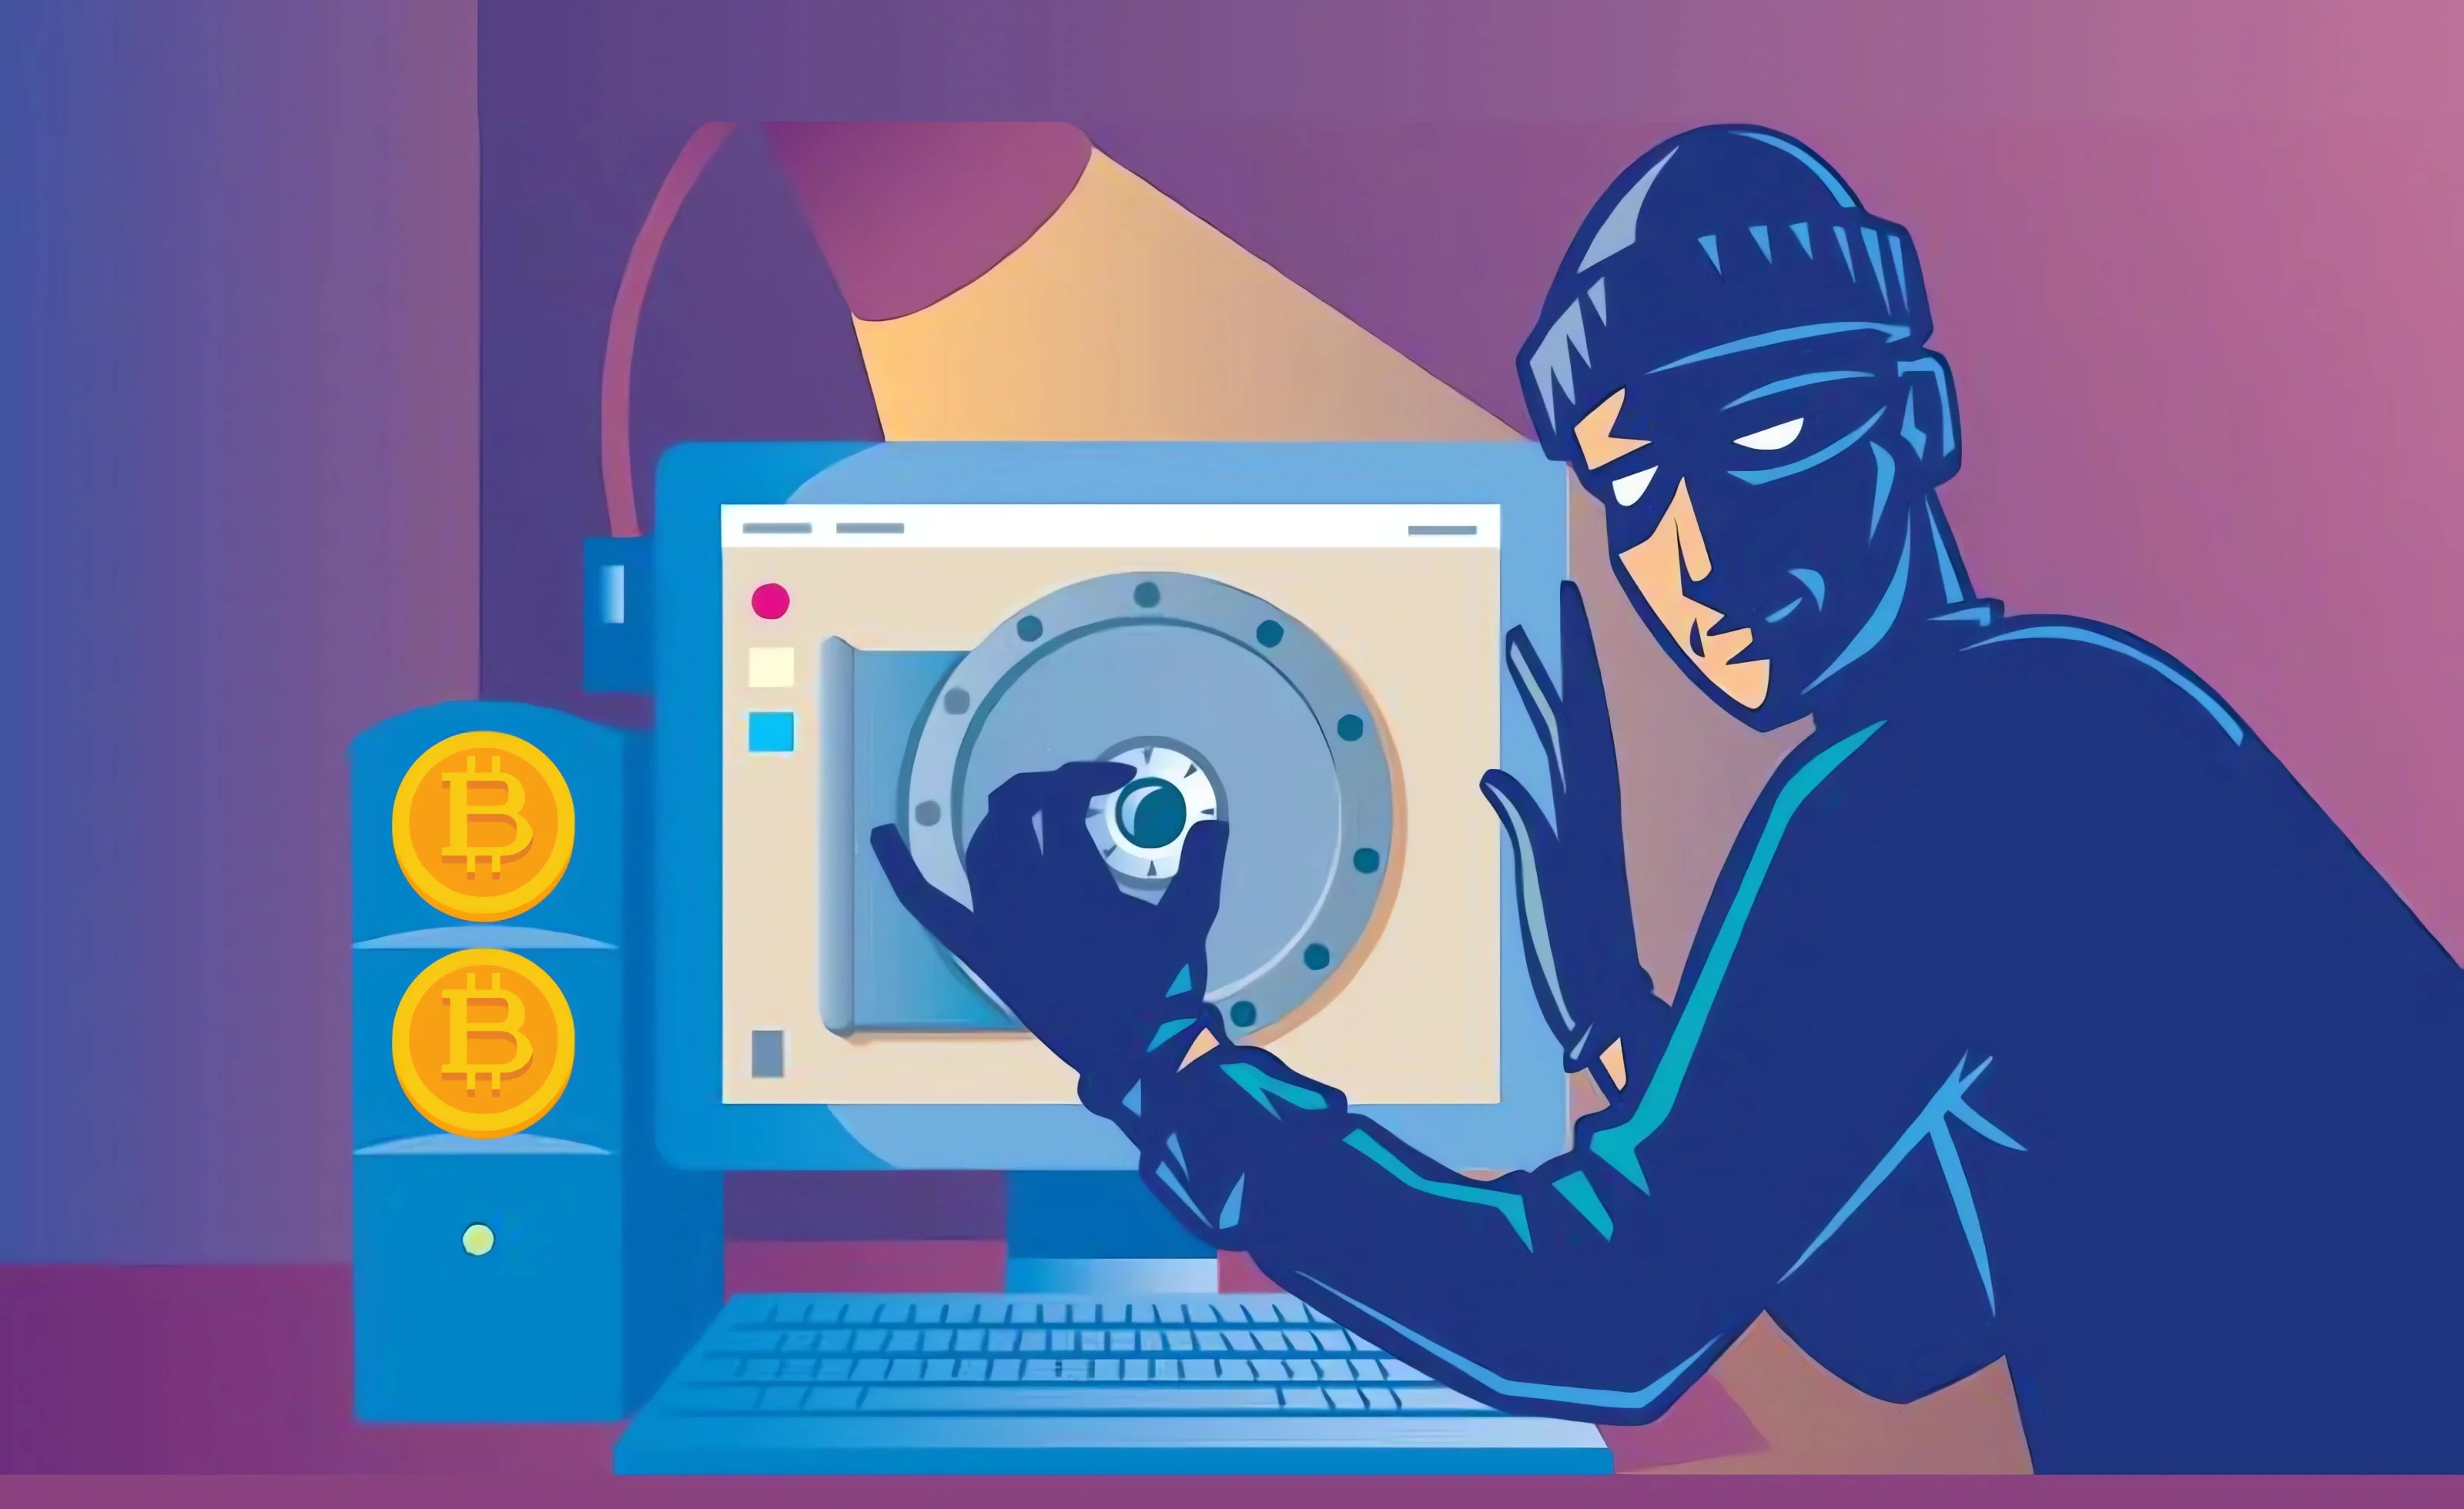 Bitcoin hacker trying to steal unlock bitcoin wallet on desktop computer